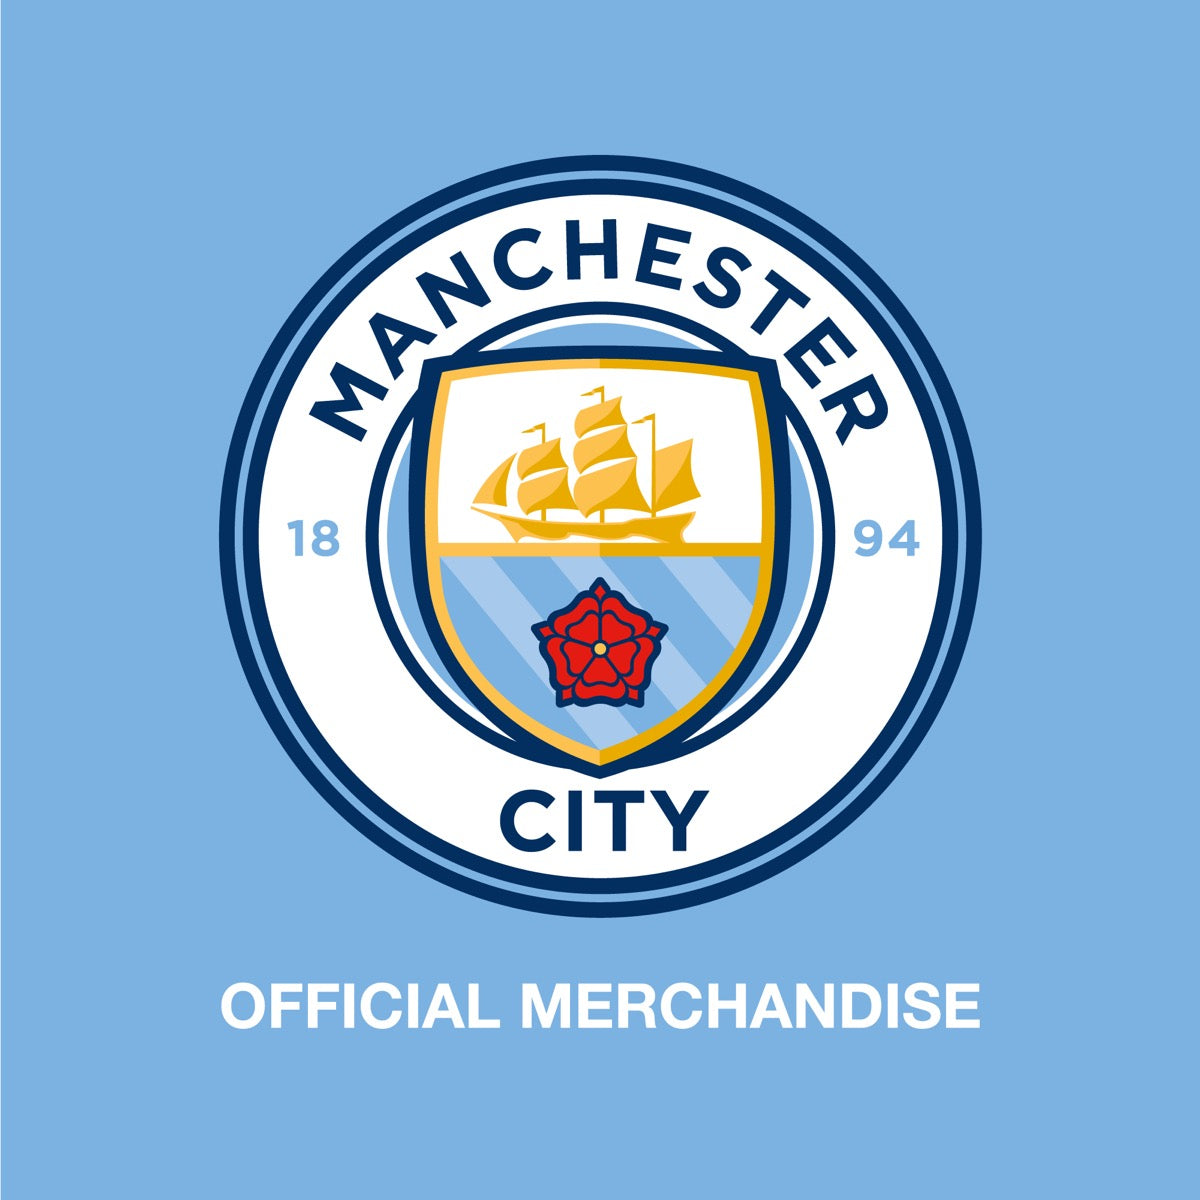 Manchester City Football Club - Defensive Four 23/24 Broken Wall Sticker + Bonus Decal Set